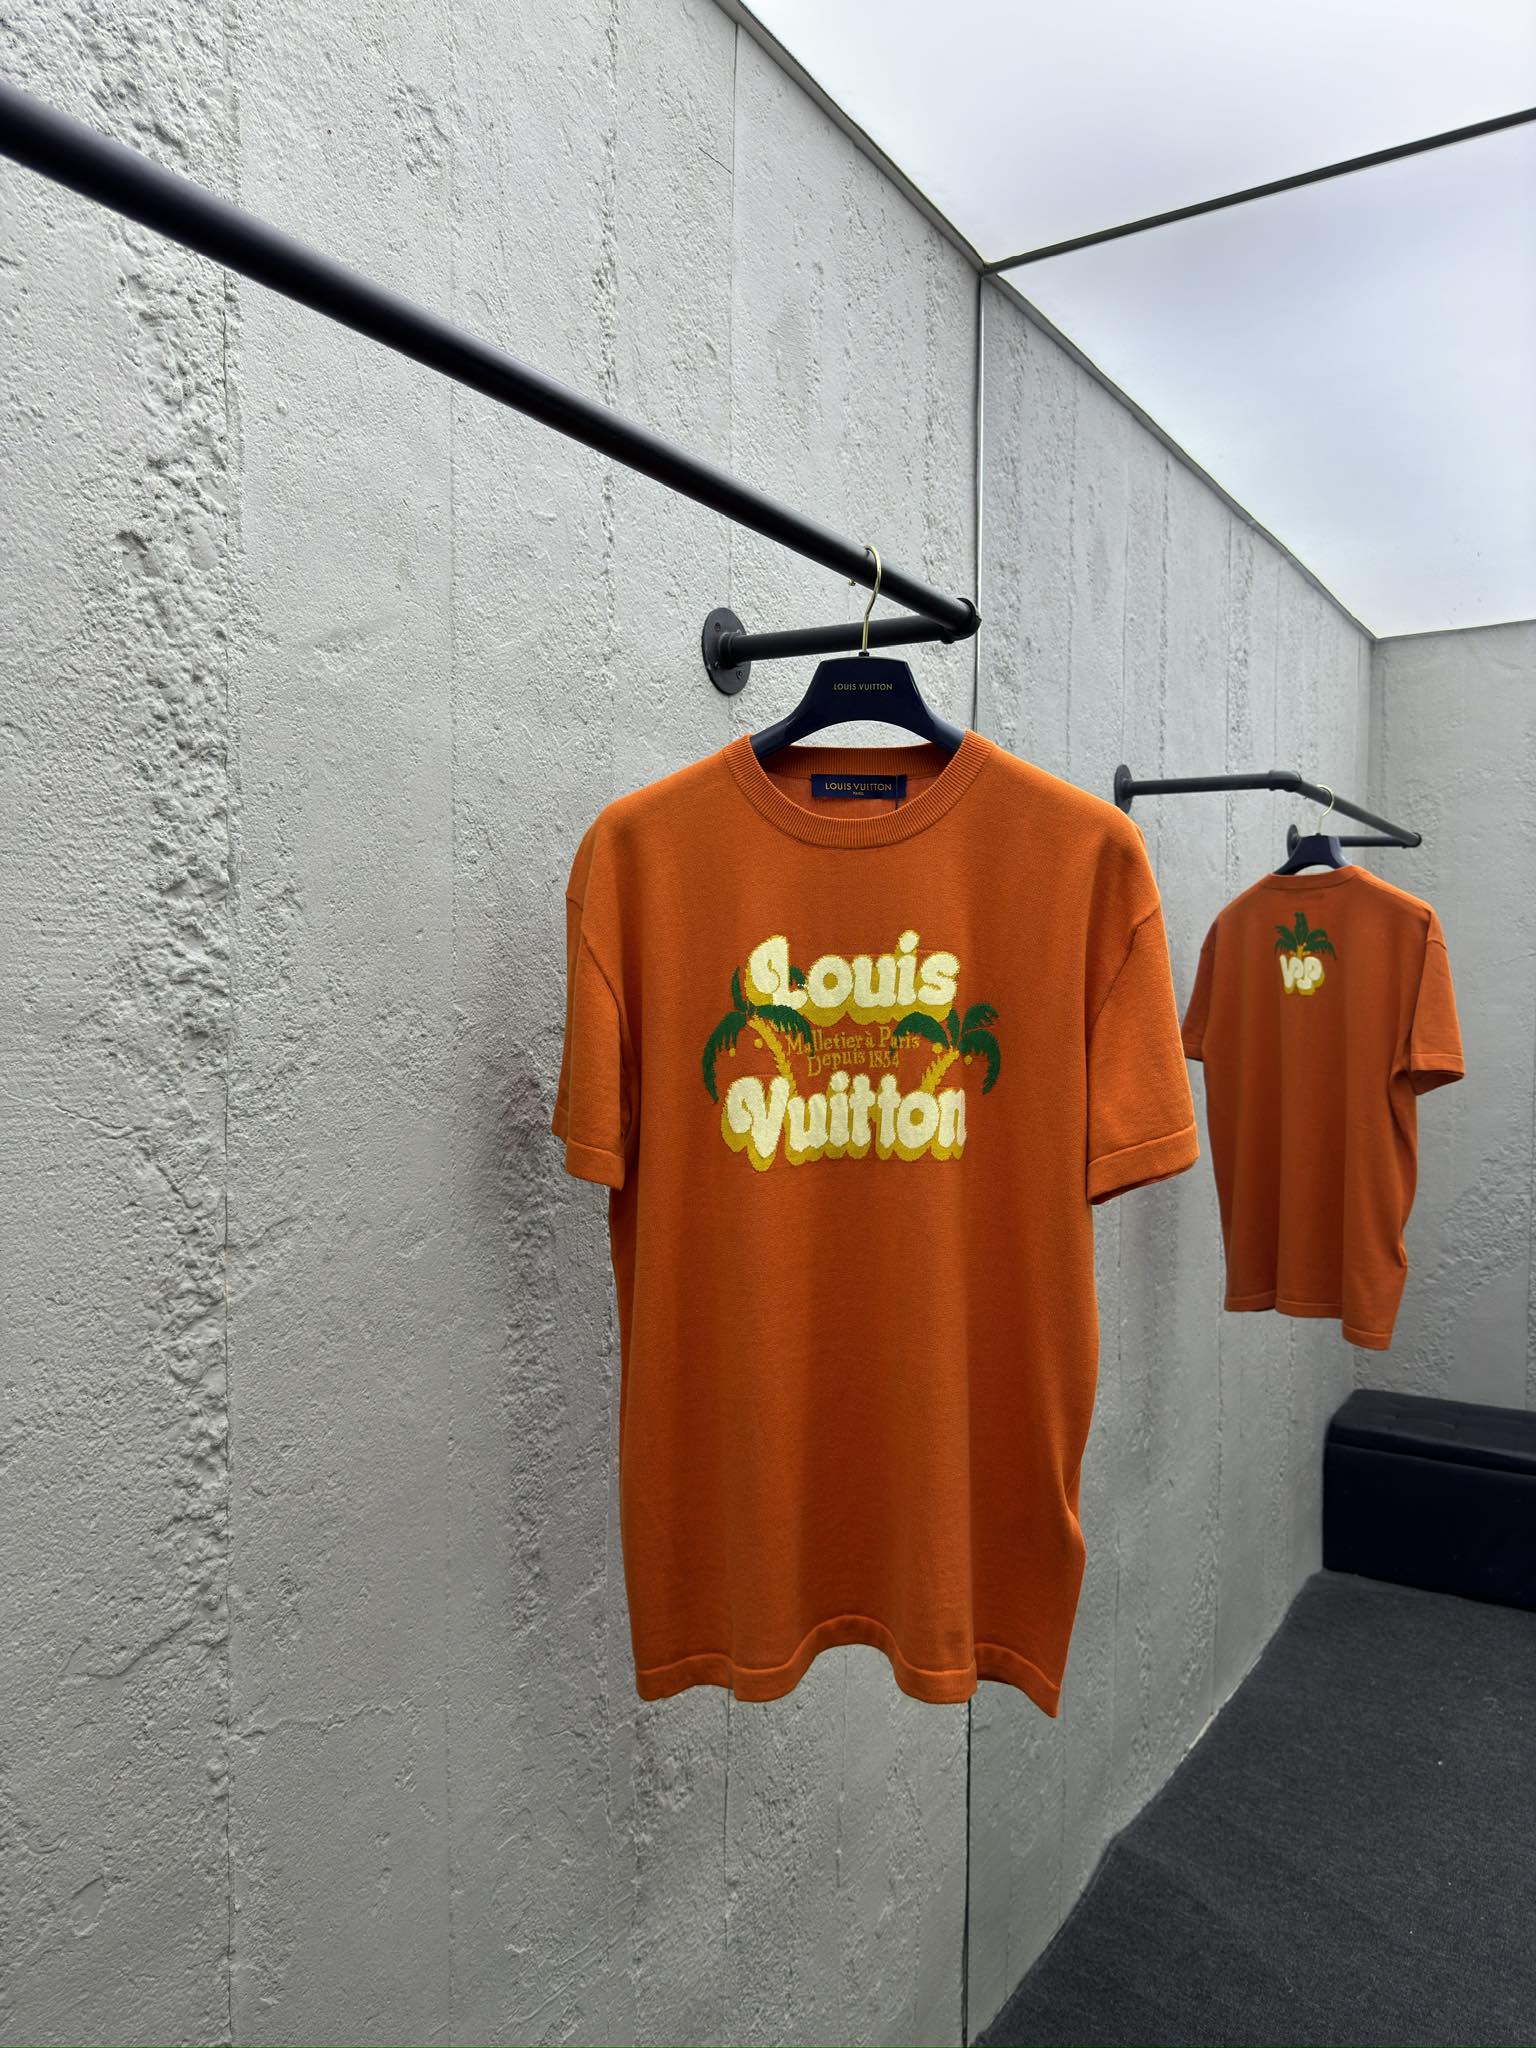 Louis Vuitton Clothing T-Shirt Replica Best
 Orange Unisex Cotton Knitting